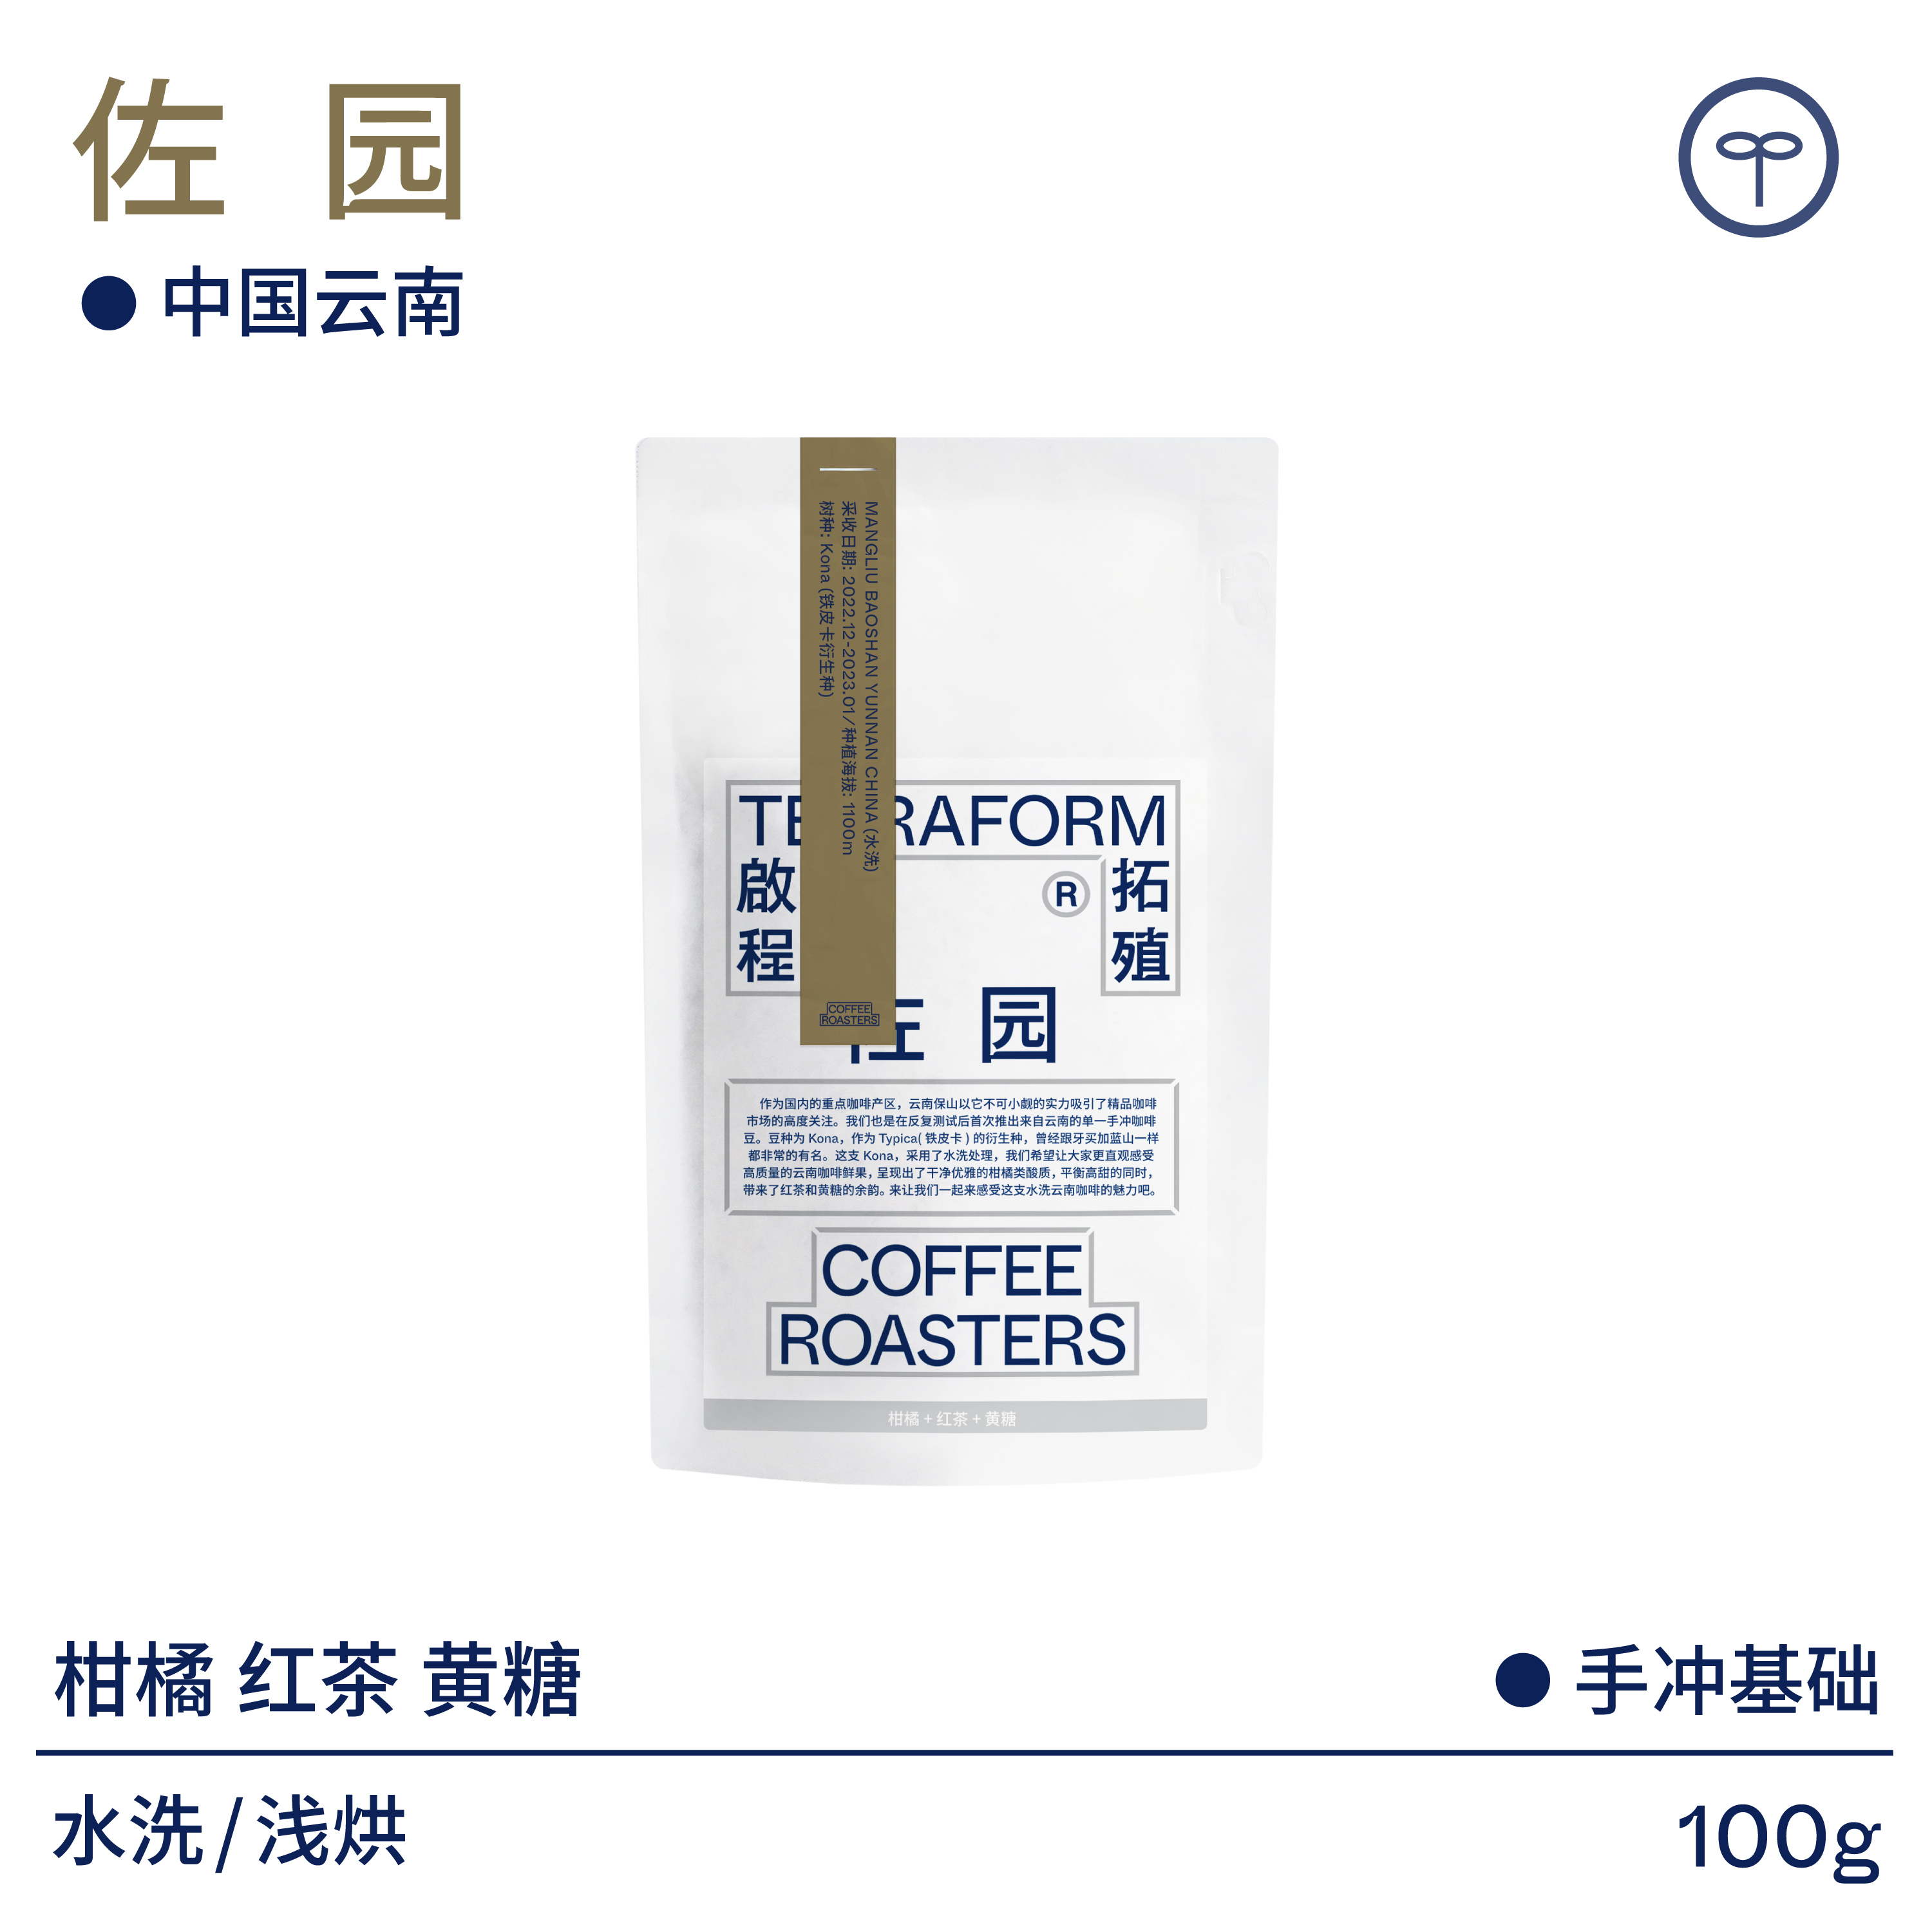 TERRAFORM COFFEE ROASTERS 啟程拓殖 柑橘 红茶 黄糖 中国云南佐园铁皮卡水洗咖啡豆100g